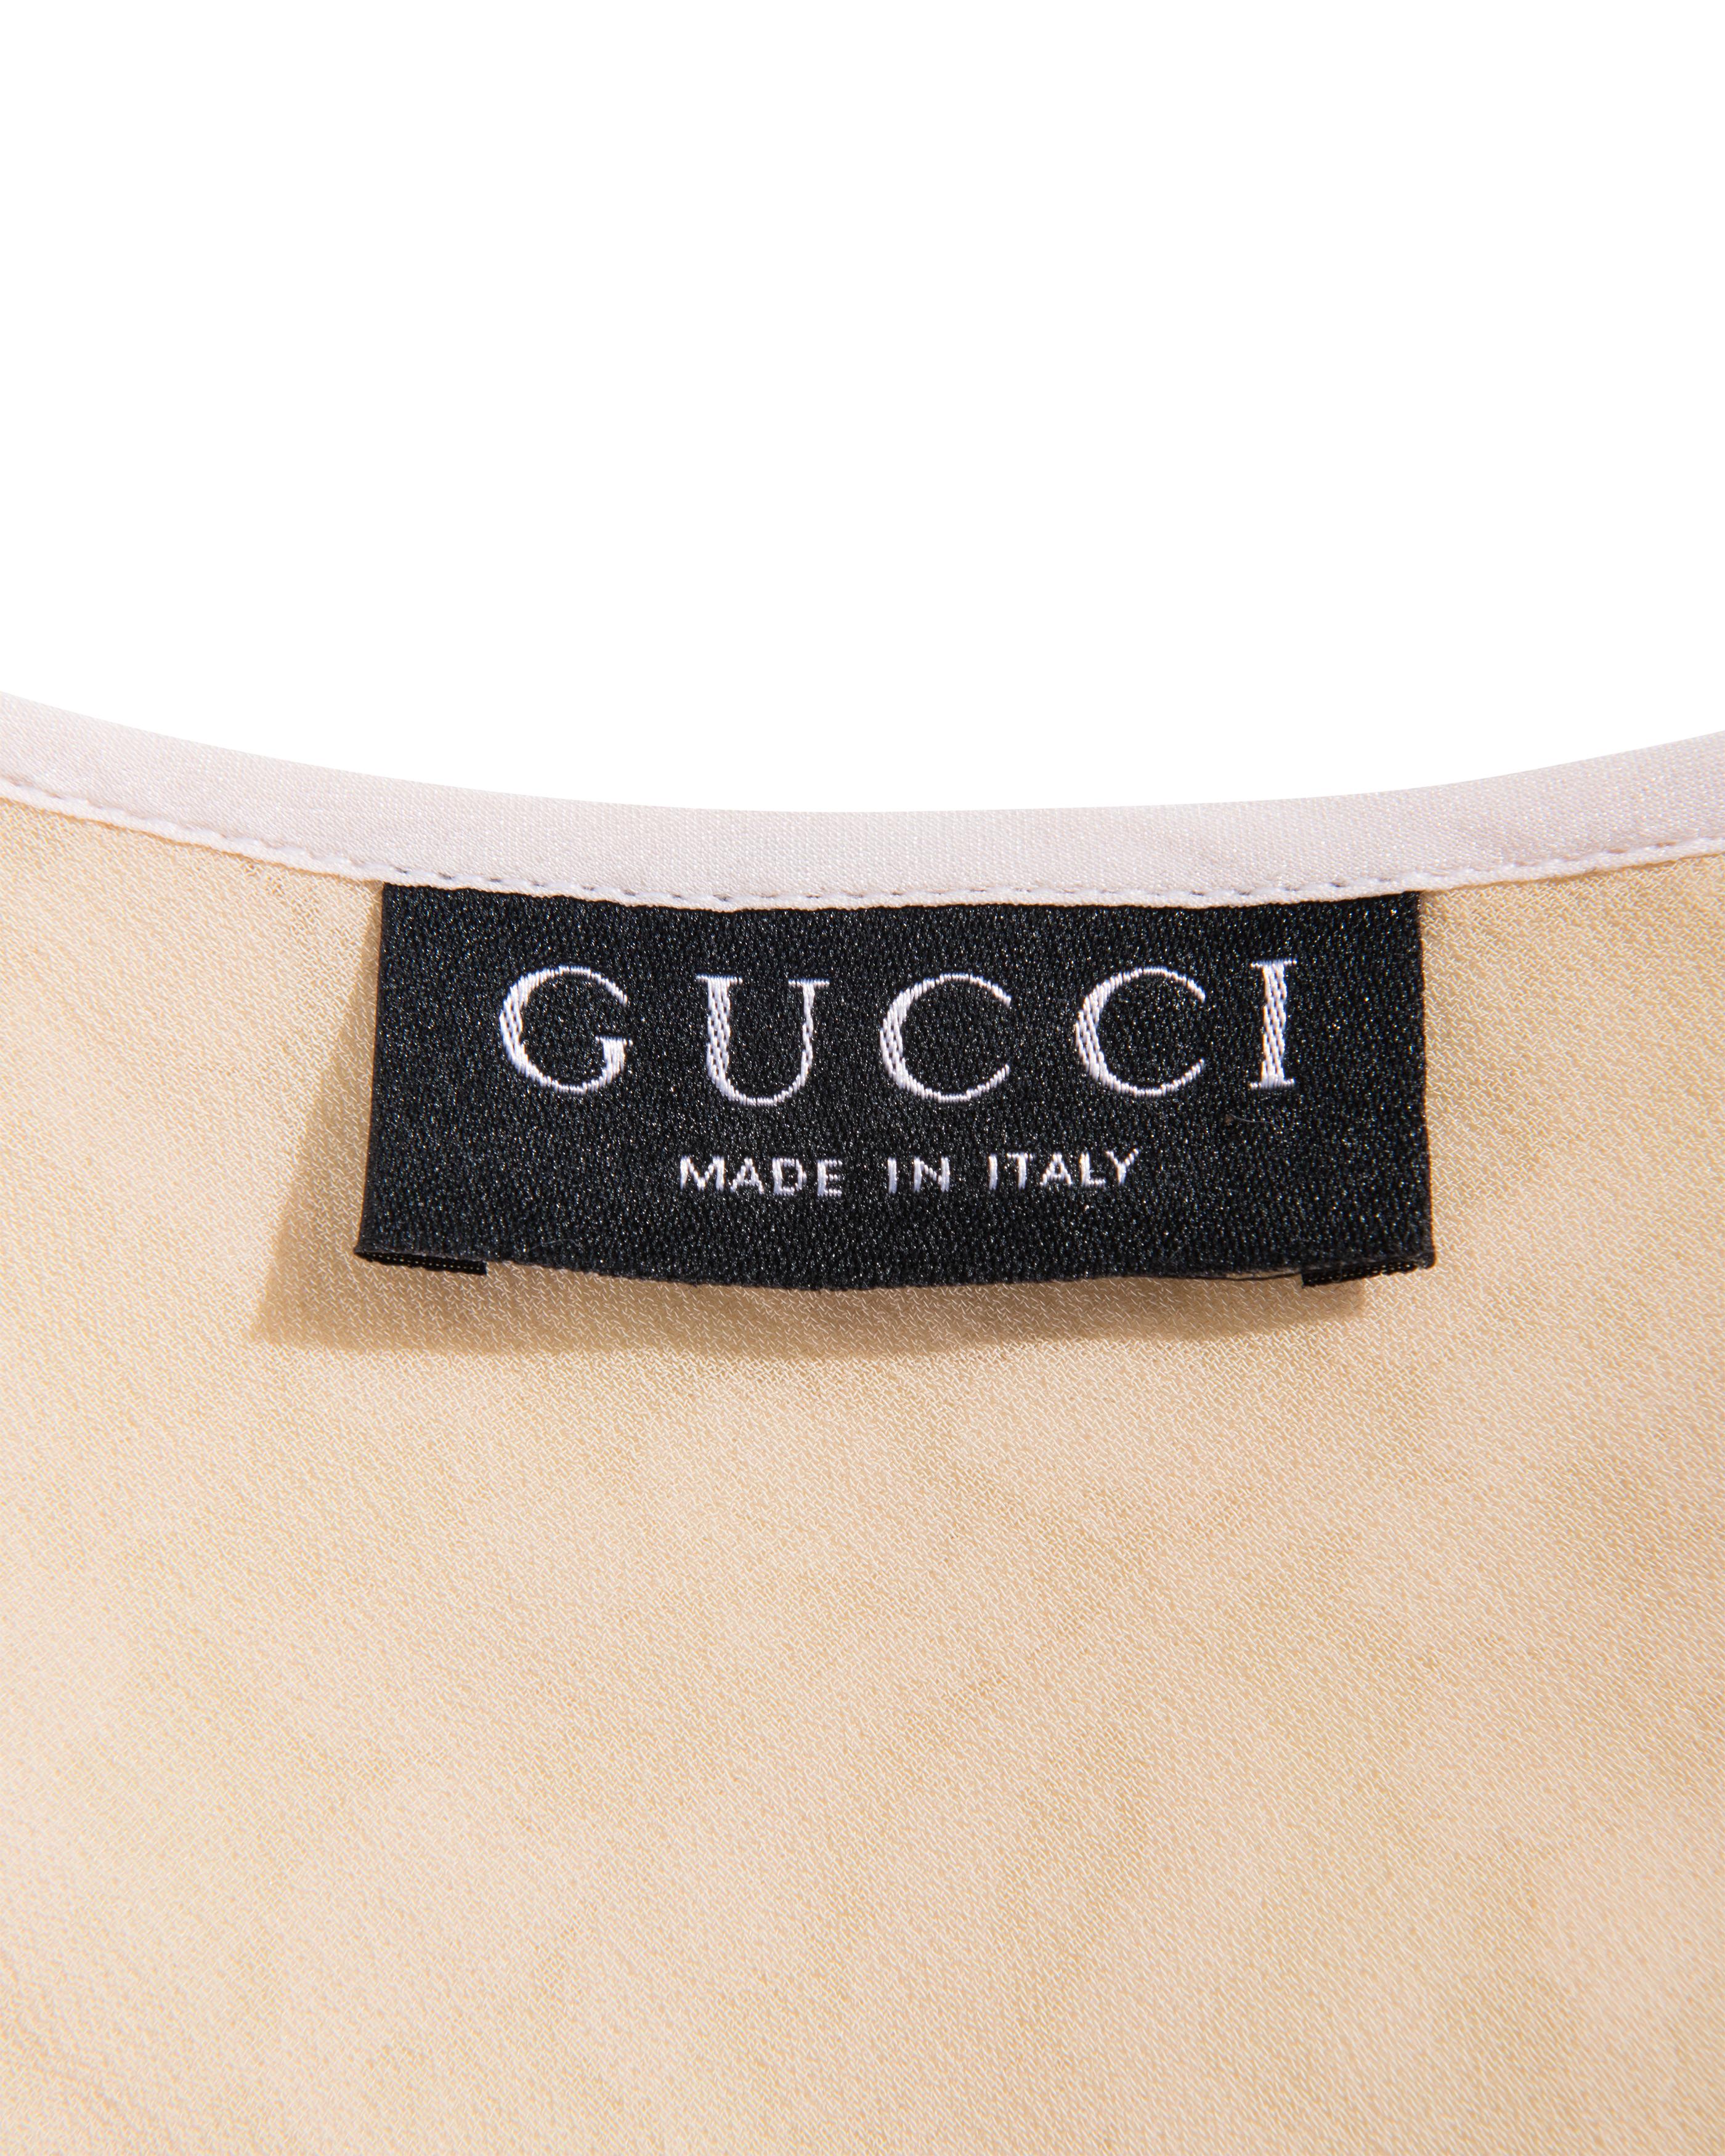 F/S 1996 Gucci by Tom Ford Weißes Spitzenkleid mit nudefarbenem Innenfutter 8